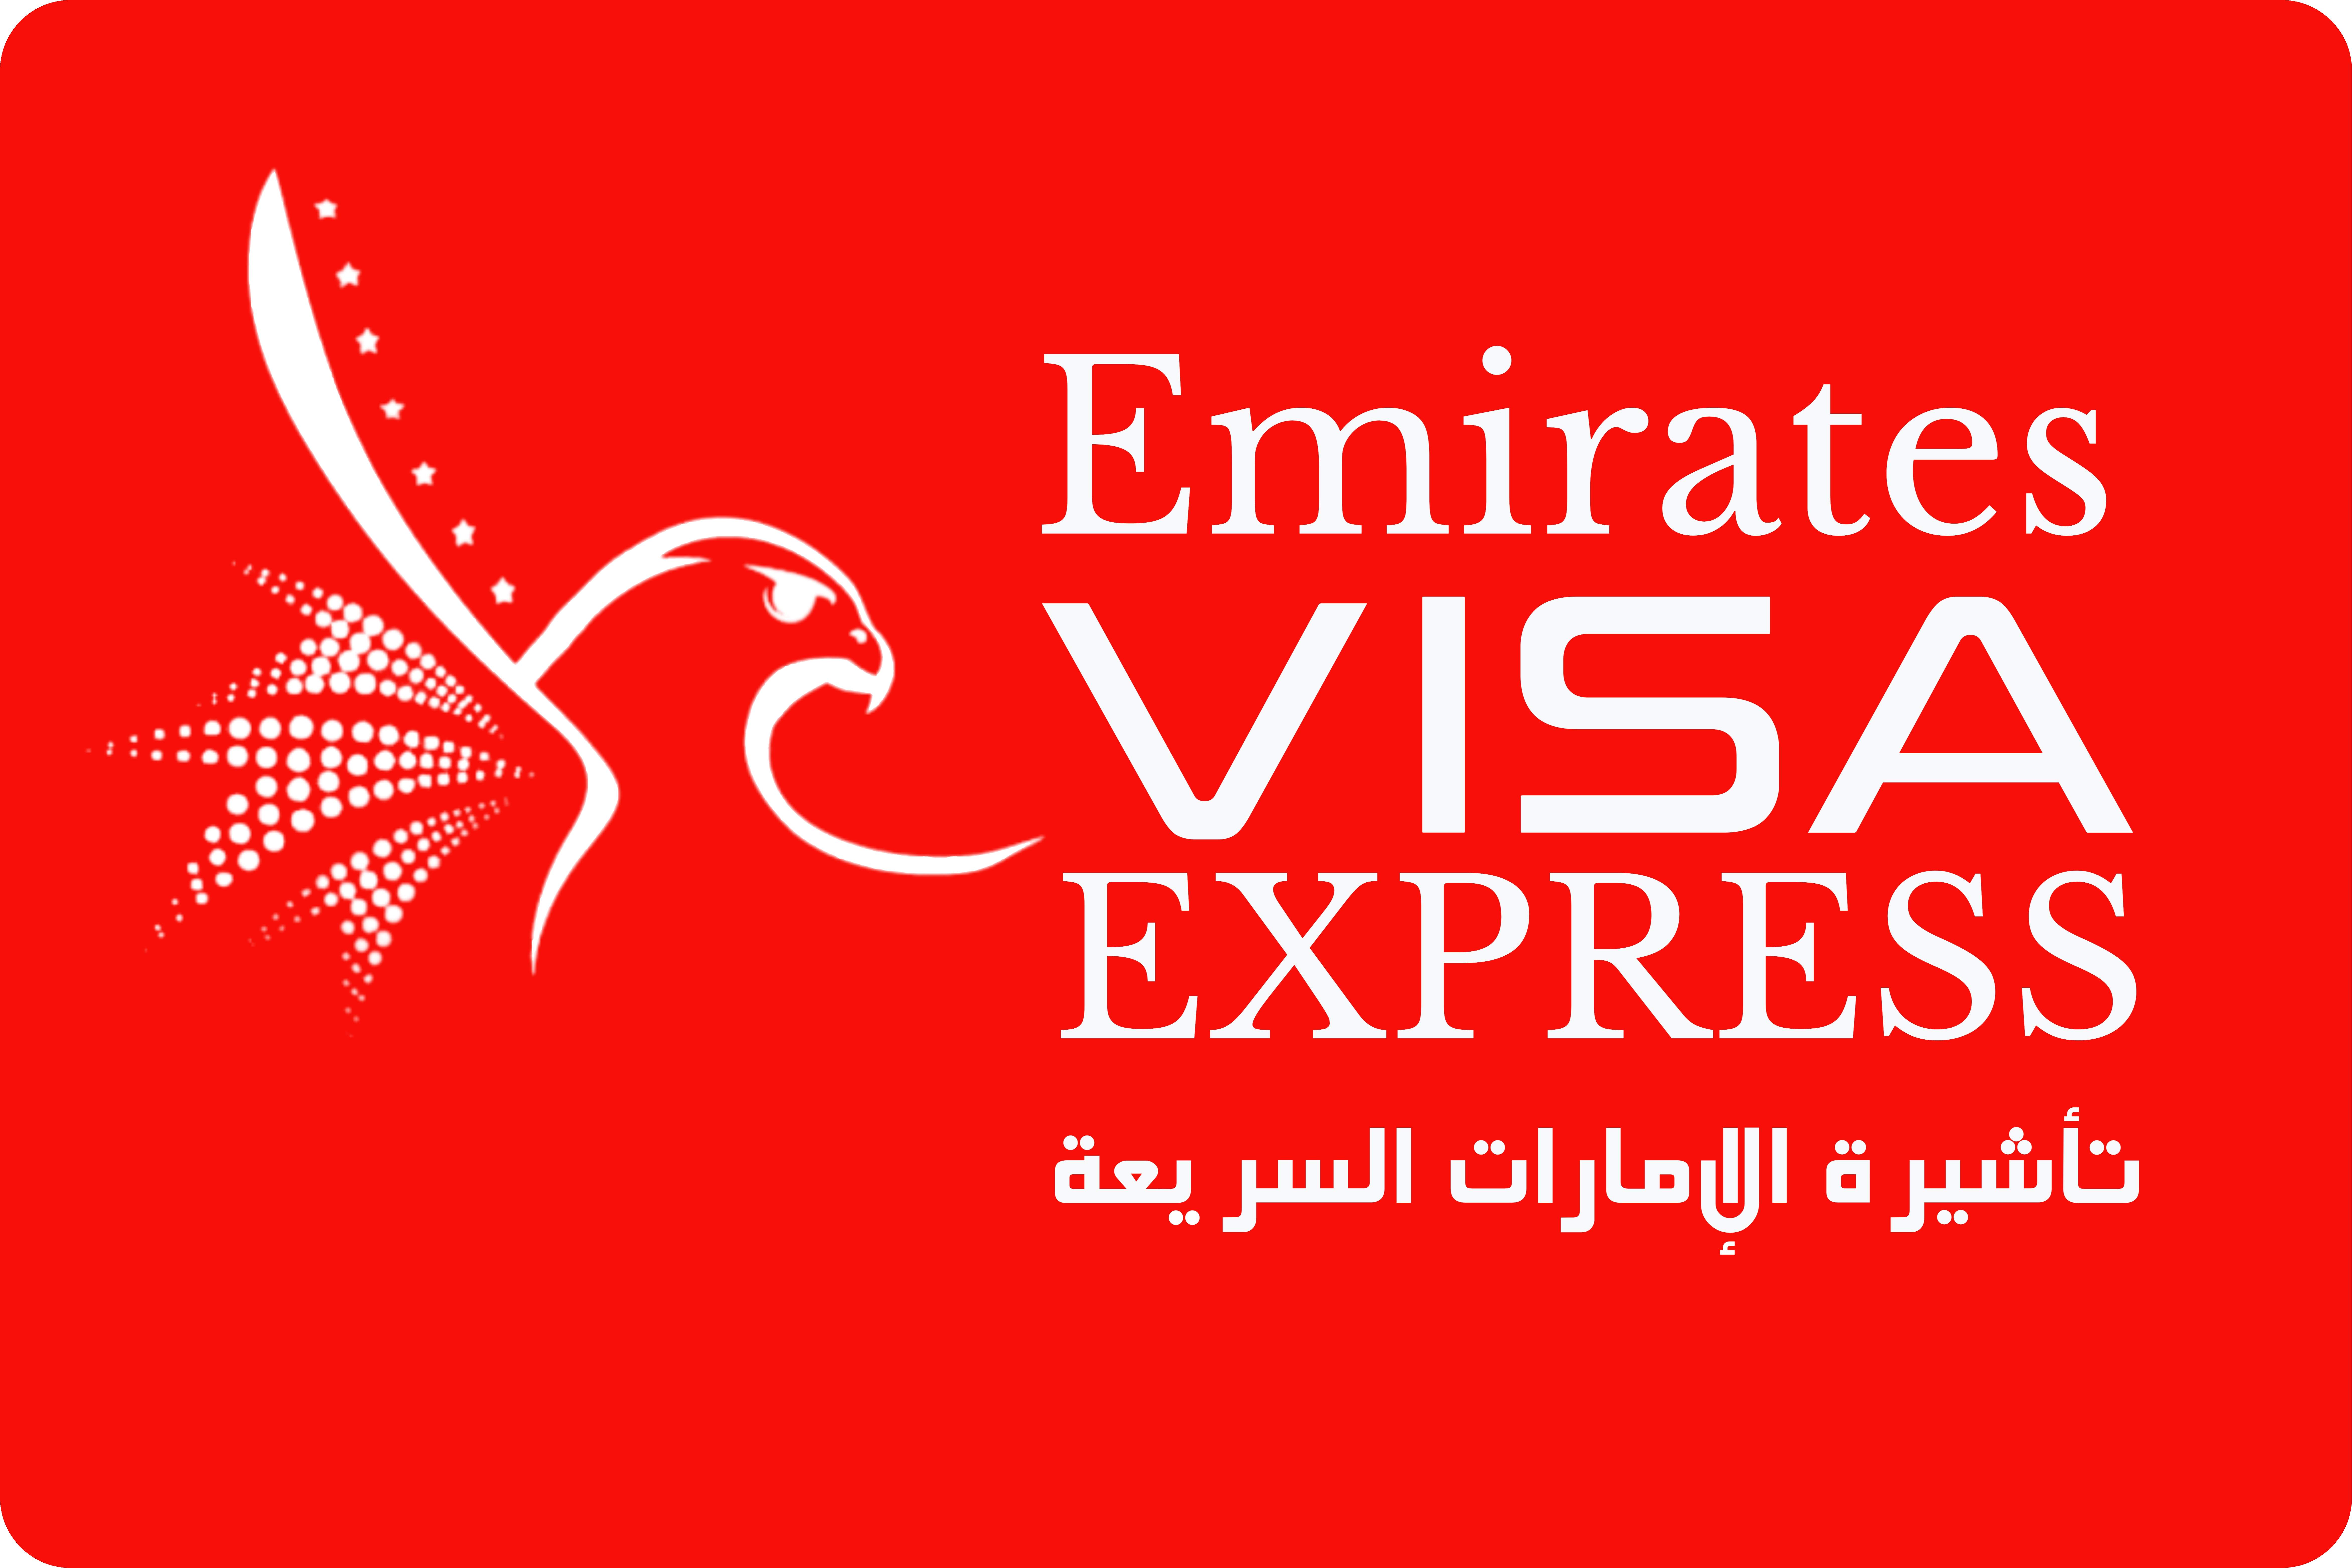 Emiratesvisa Express Cover Image